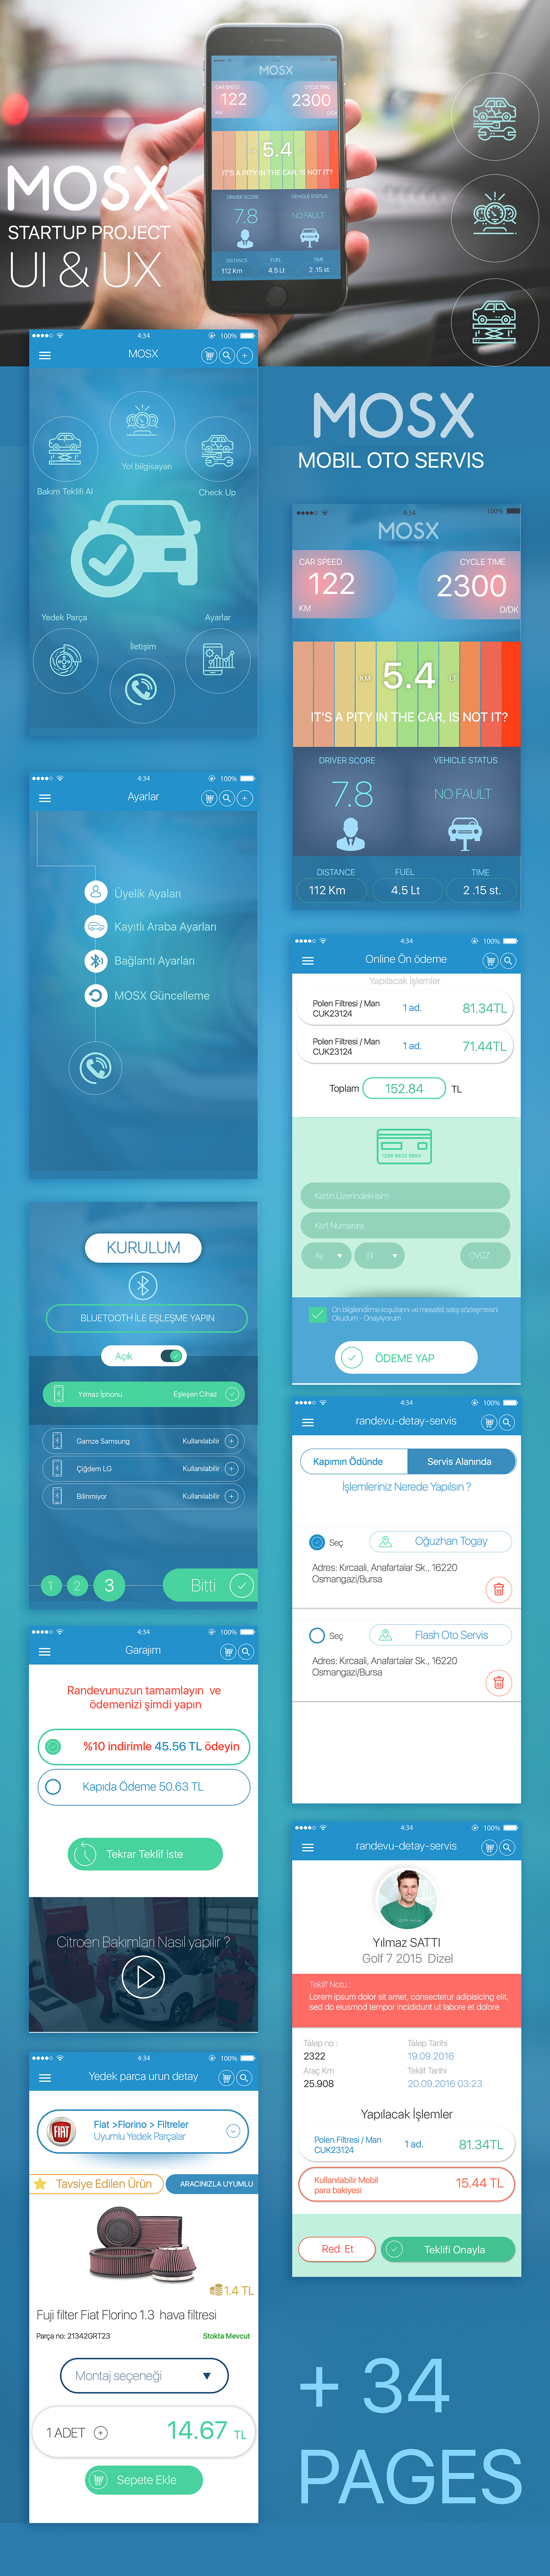 MOSX - Mobil Oto Servis Startup  UI-UX design ui design app design